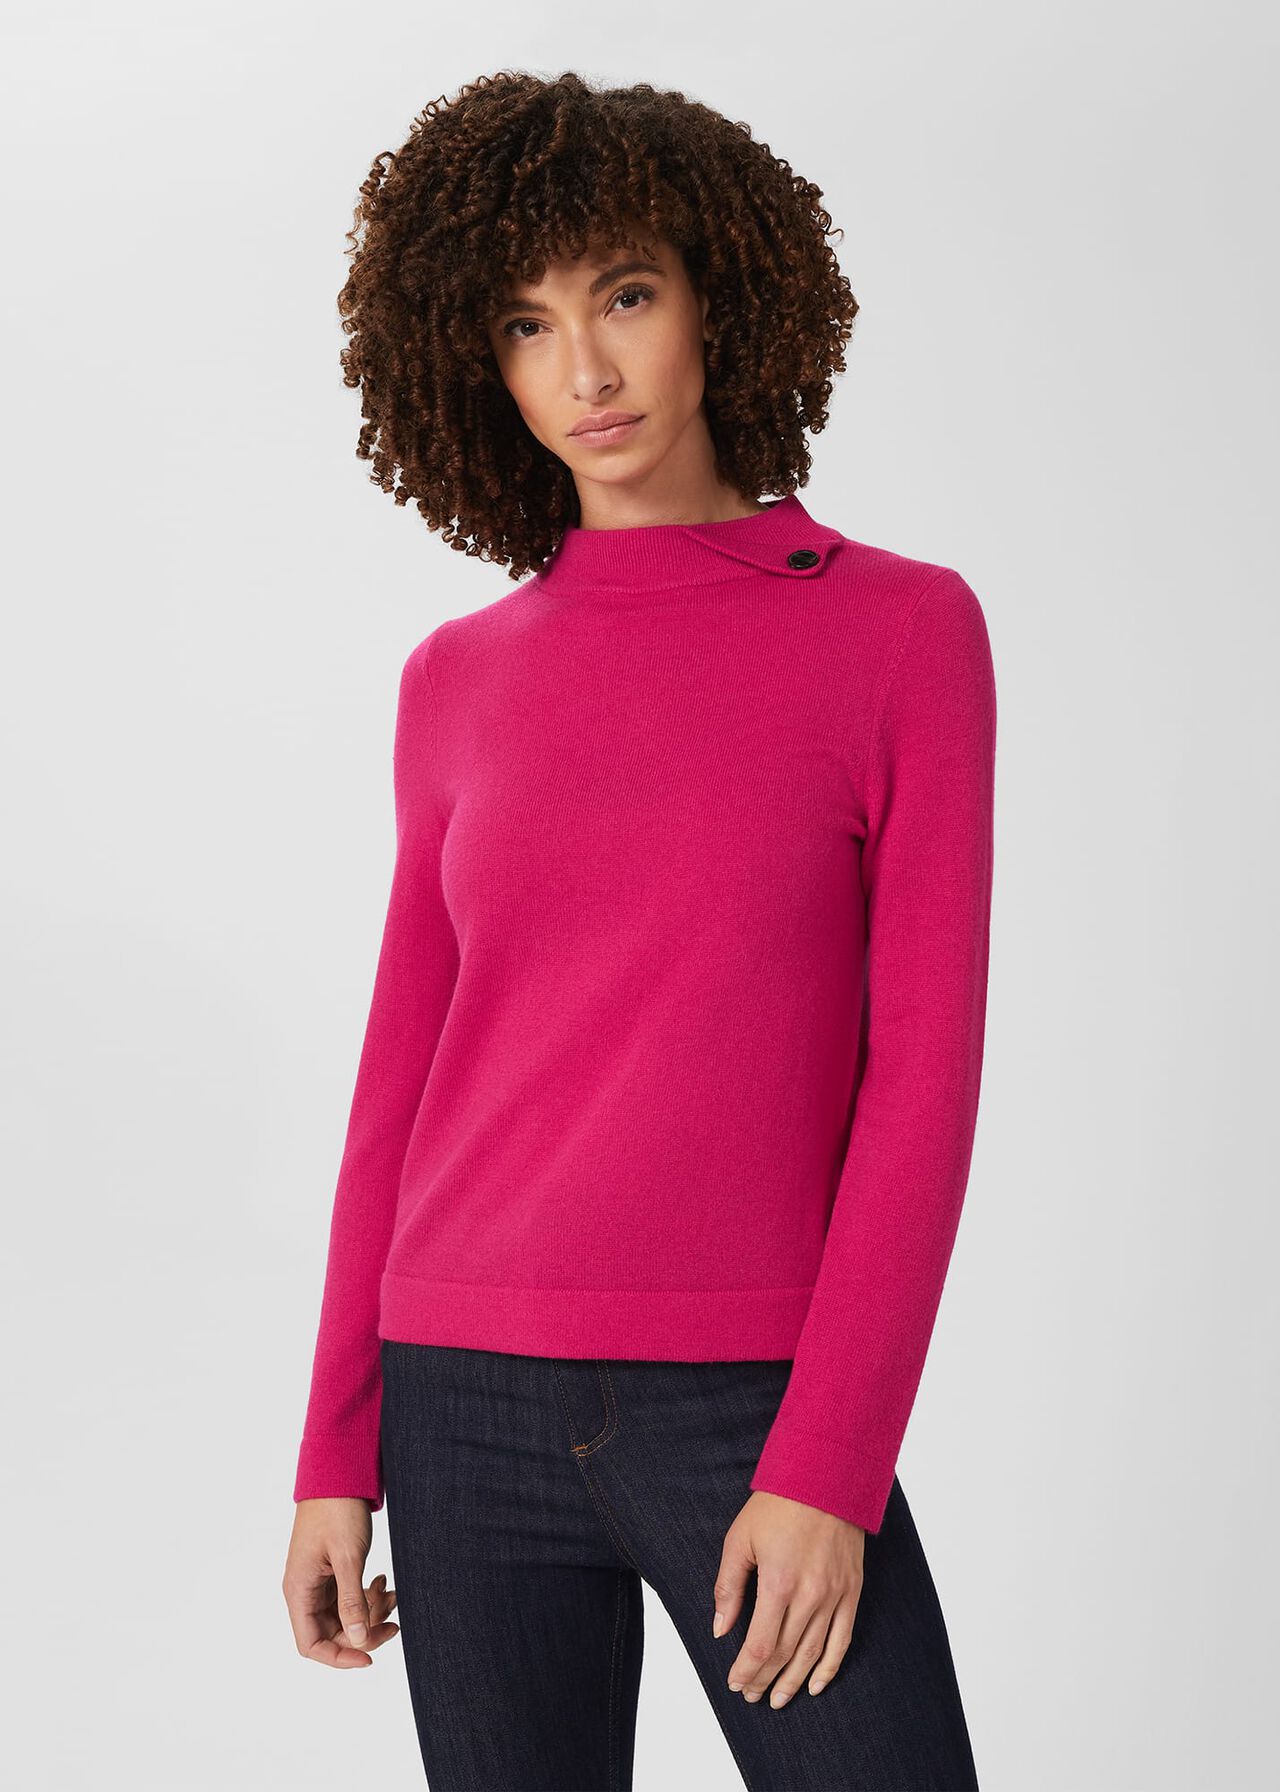 Talia Wool Cashmere Sweater, Granita Pink, hi-res